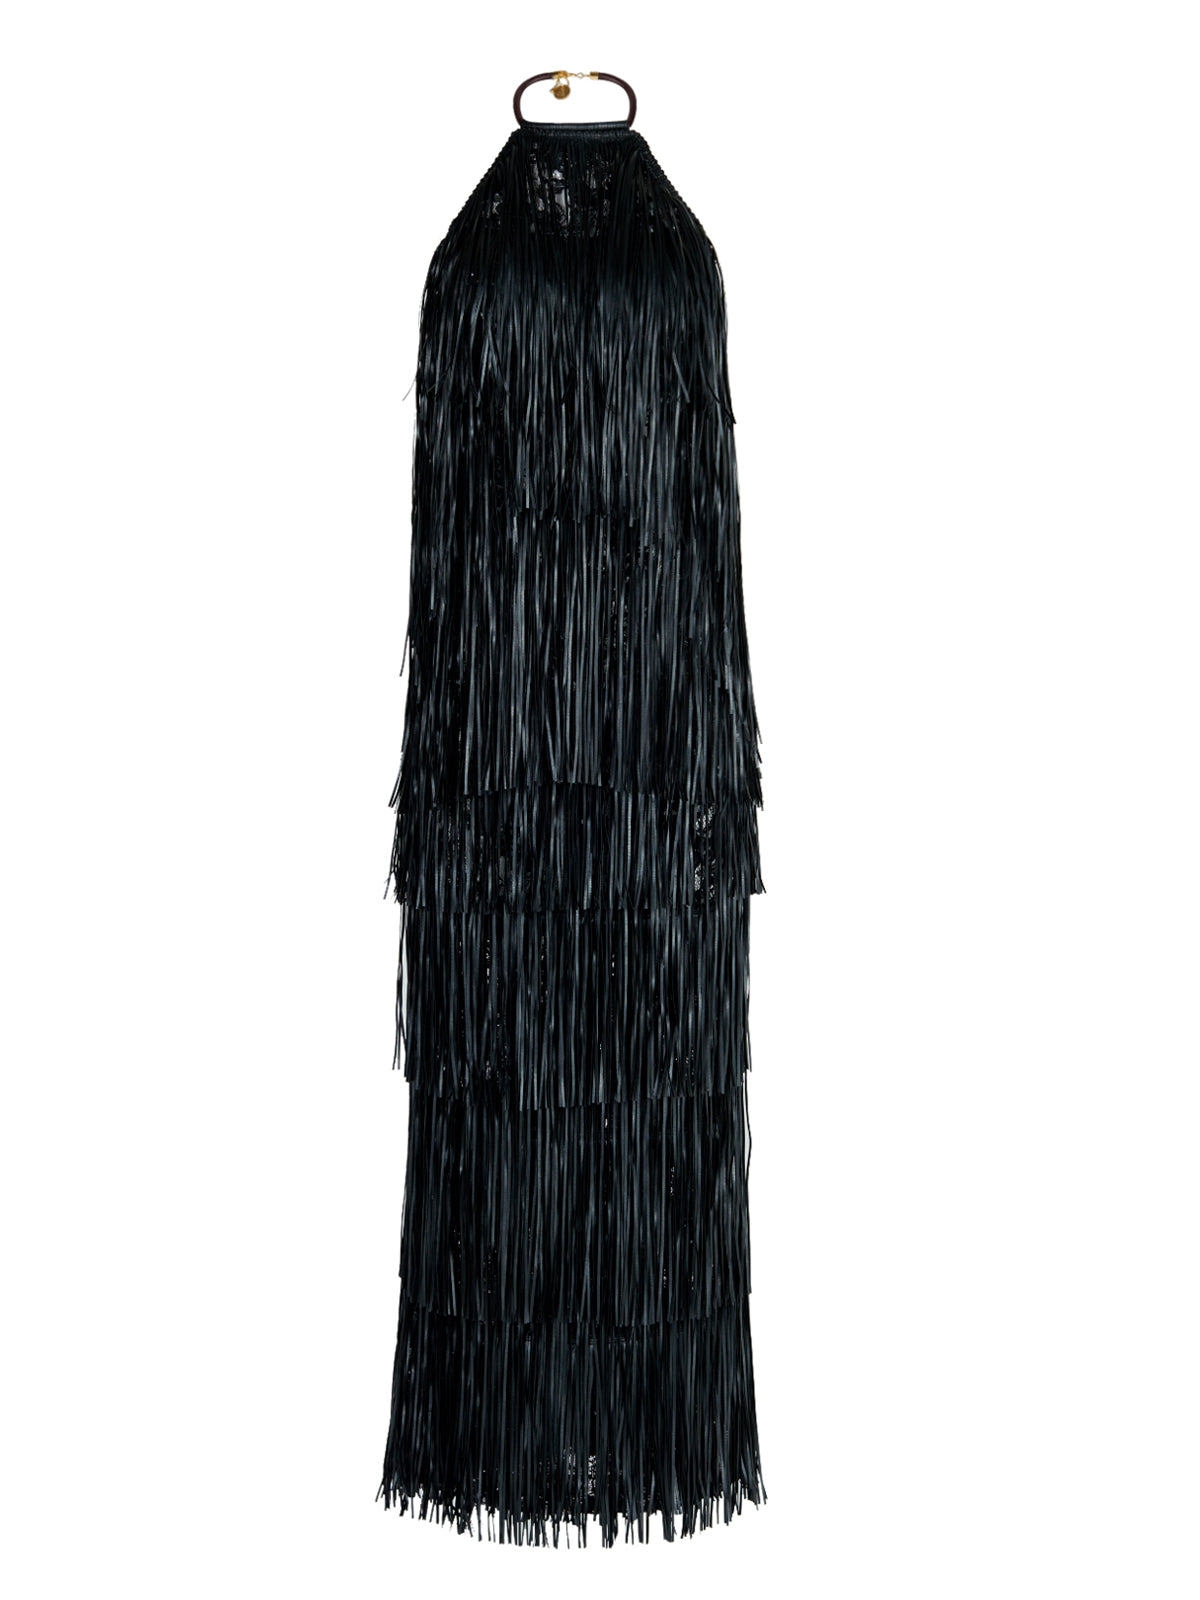 Susa Dress Black